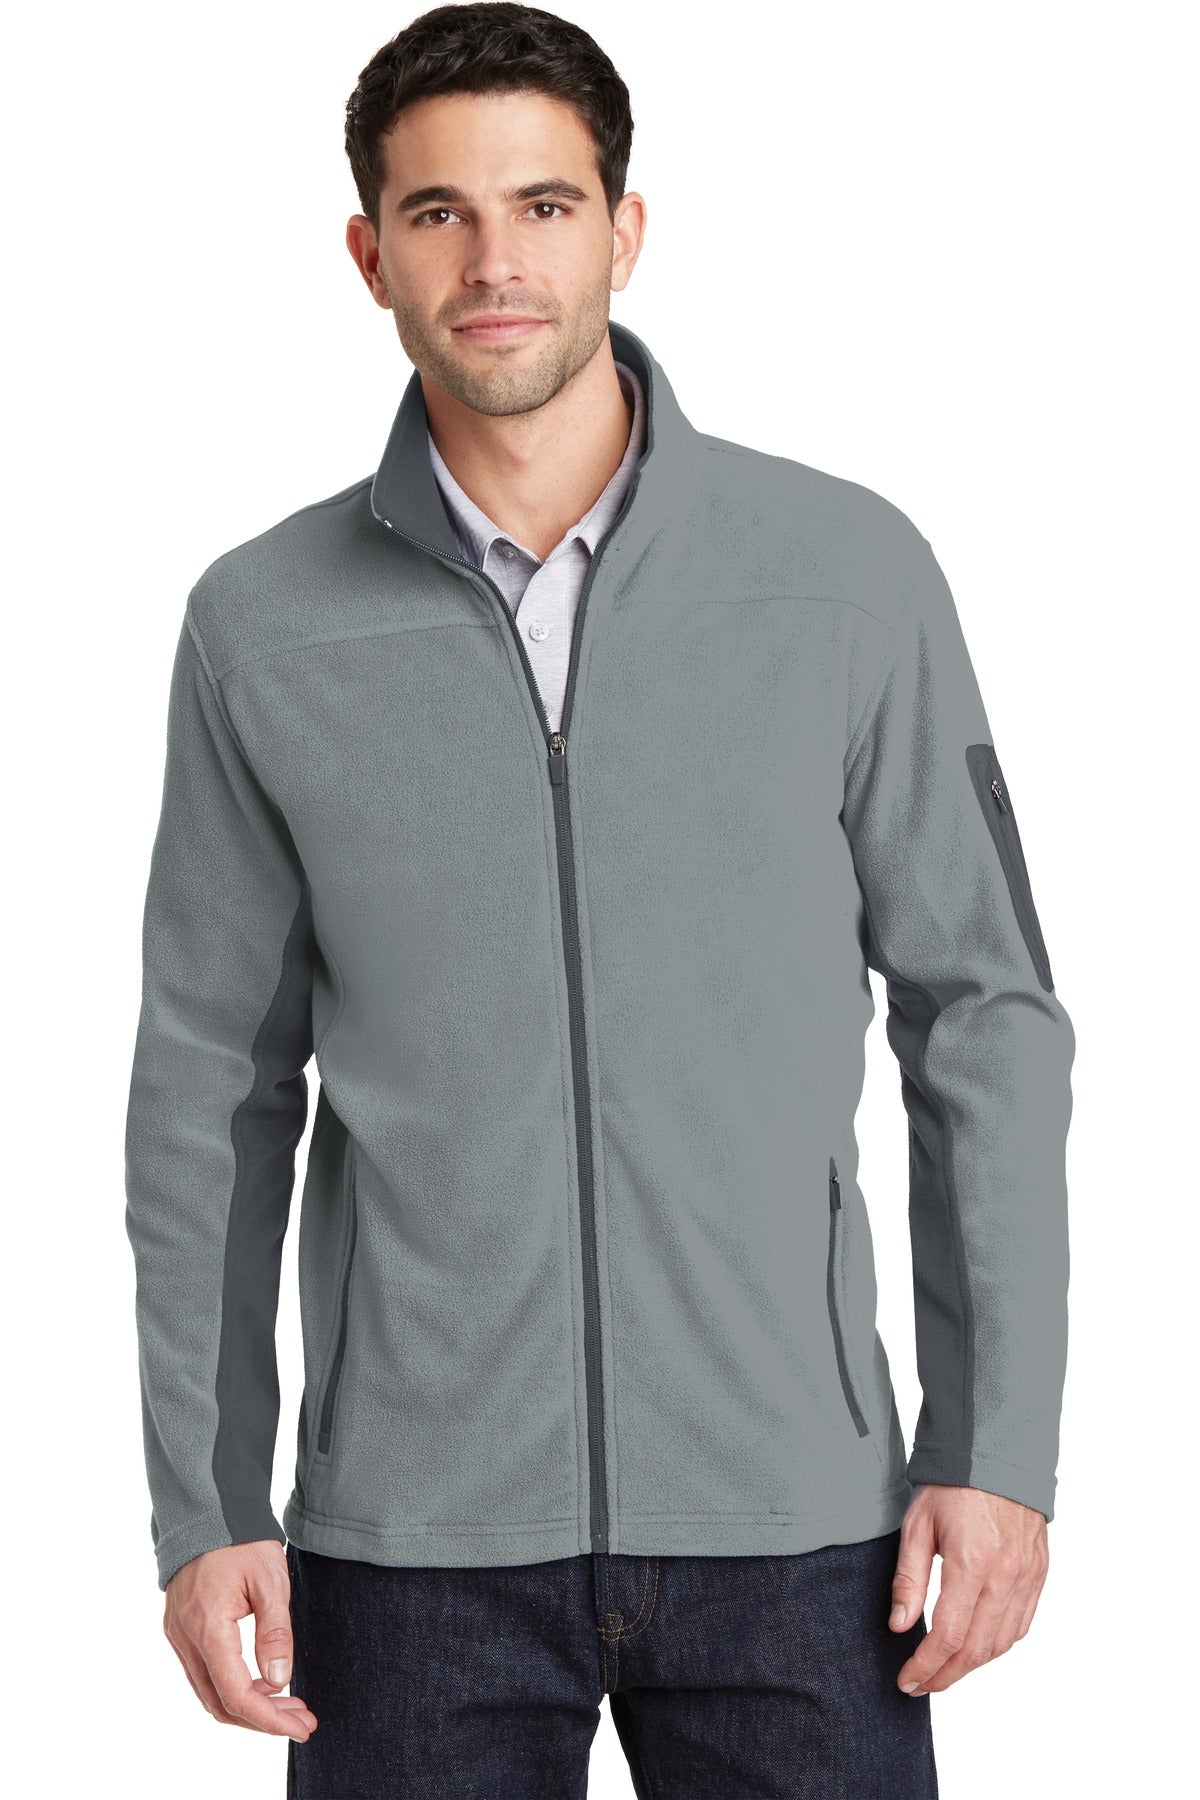 Custom Embroidered - Port Authority® Summit Fleece Full-Zip Jacket. F233